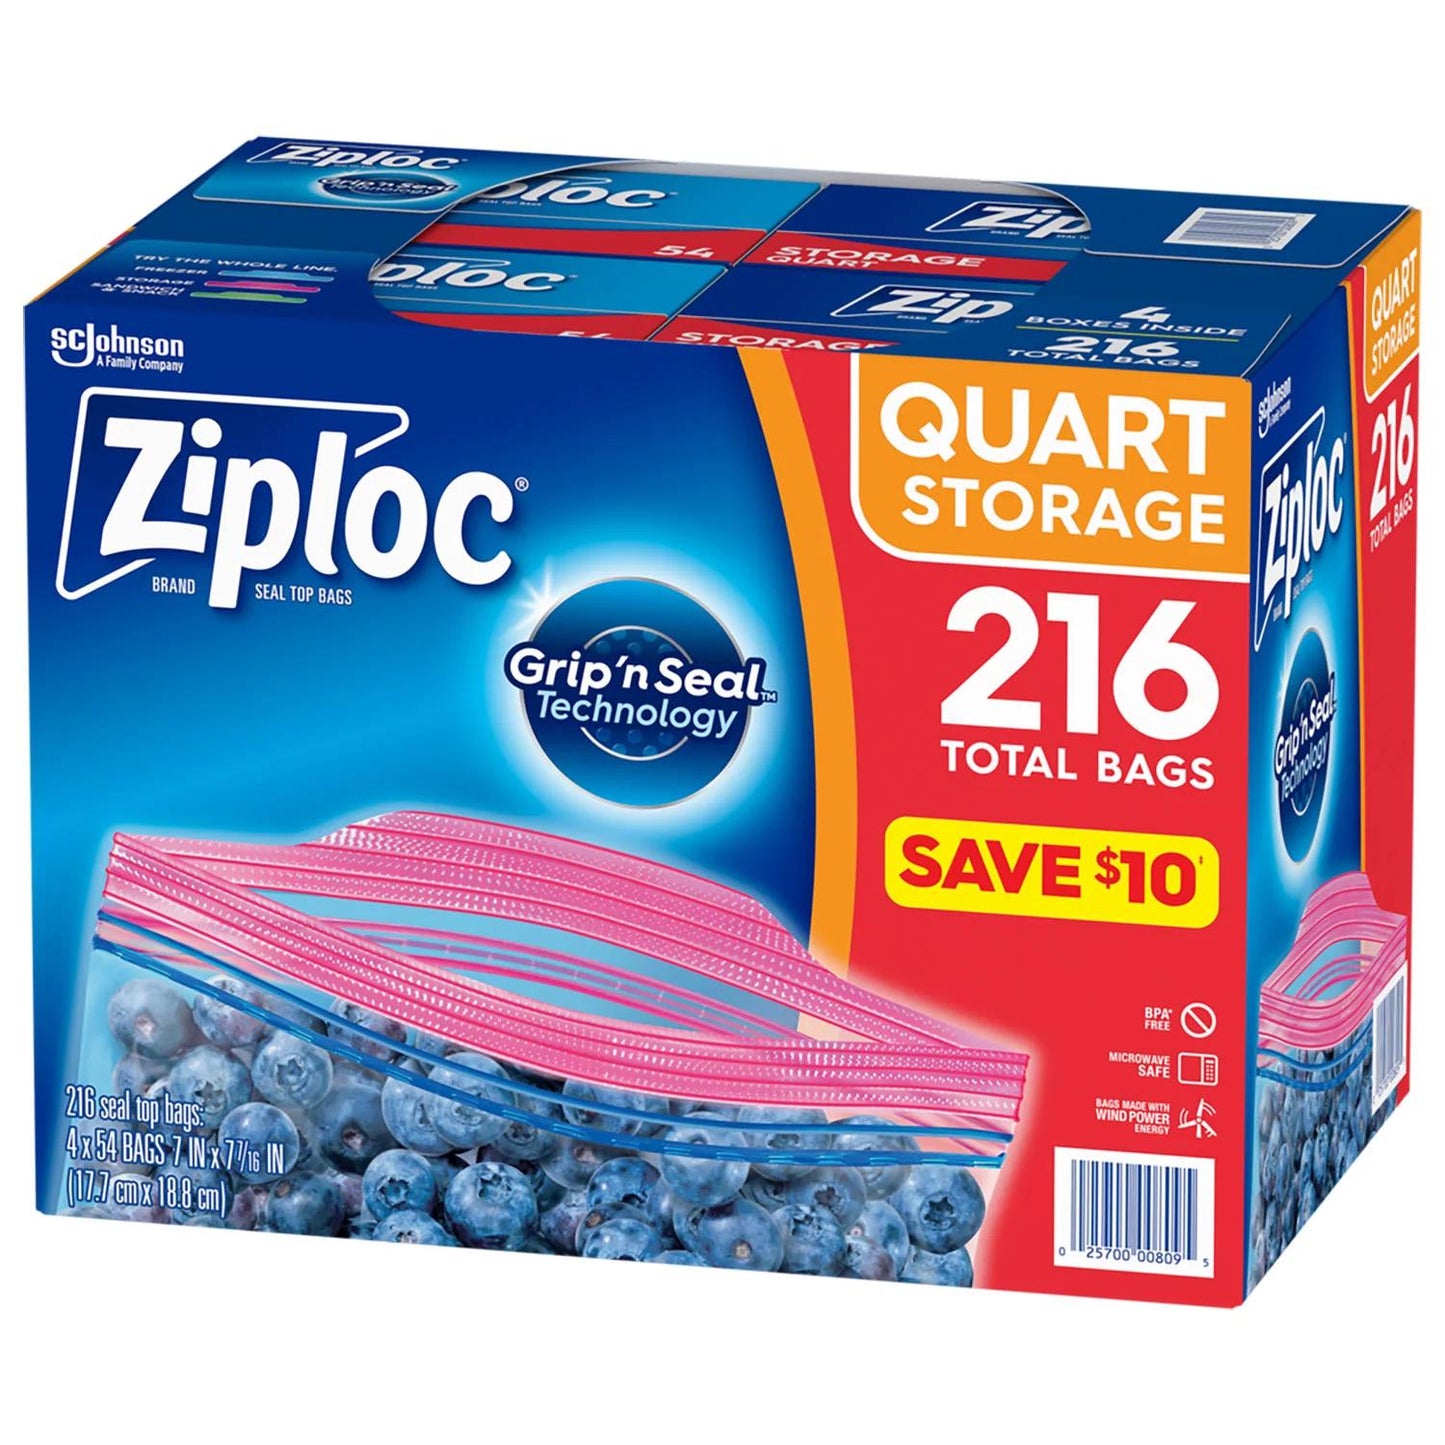 Ziploc Storage Quart Bags with New Stay Open Design (216 ct.)